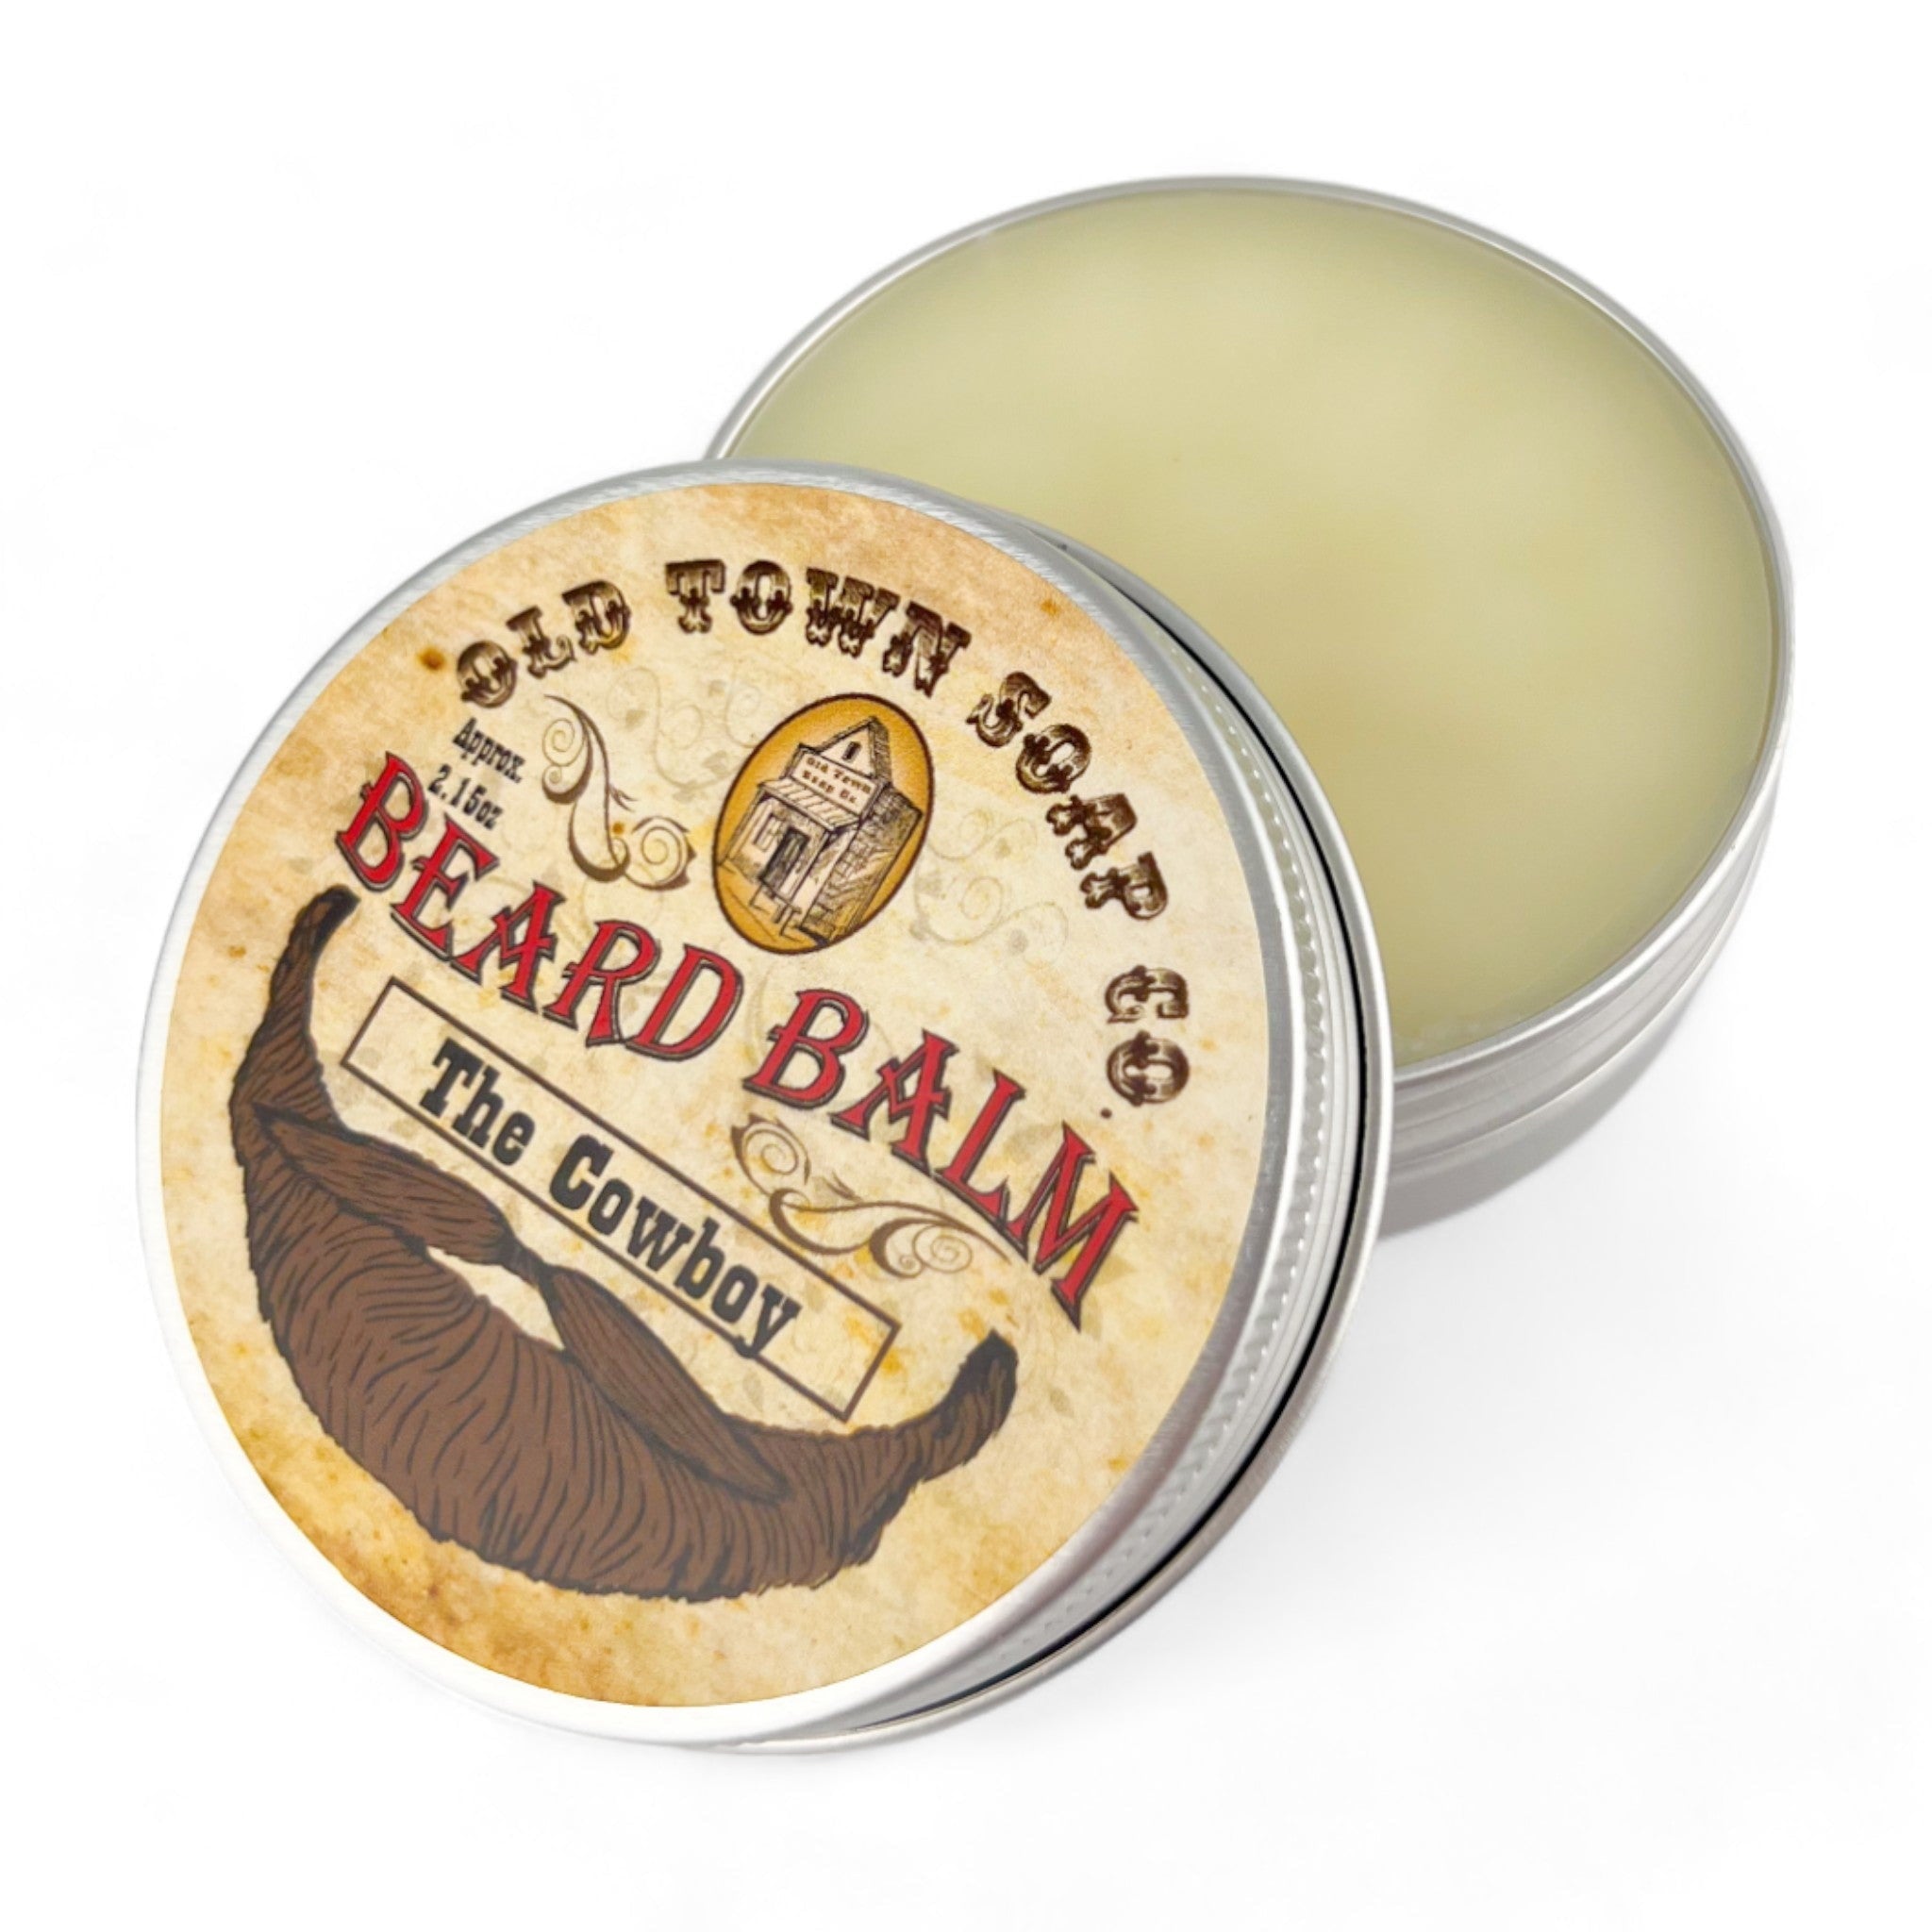 The Cowboy Beard Balm - Old Town Soap Co.